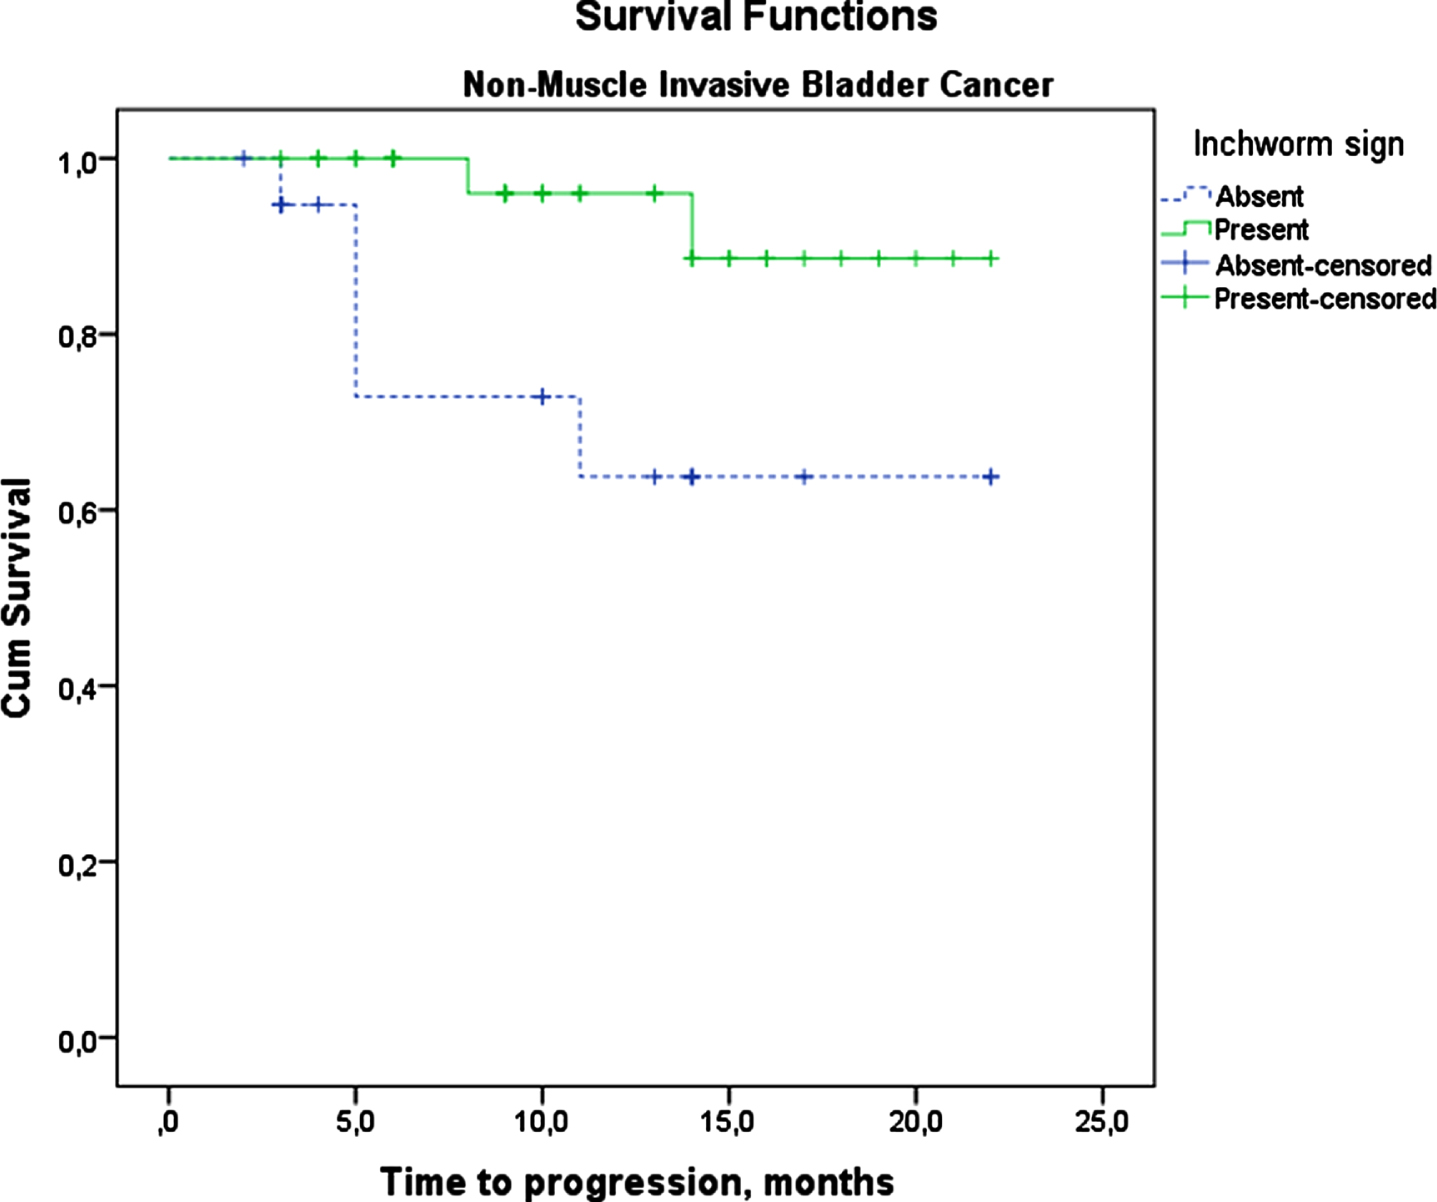 Progression-free Kaplan-Meier Survival Analysis of Non-Muscle Invasive Bladder Cancer patients.